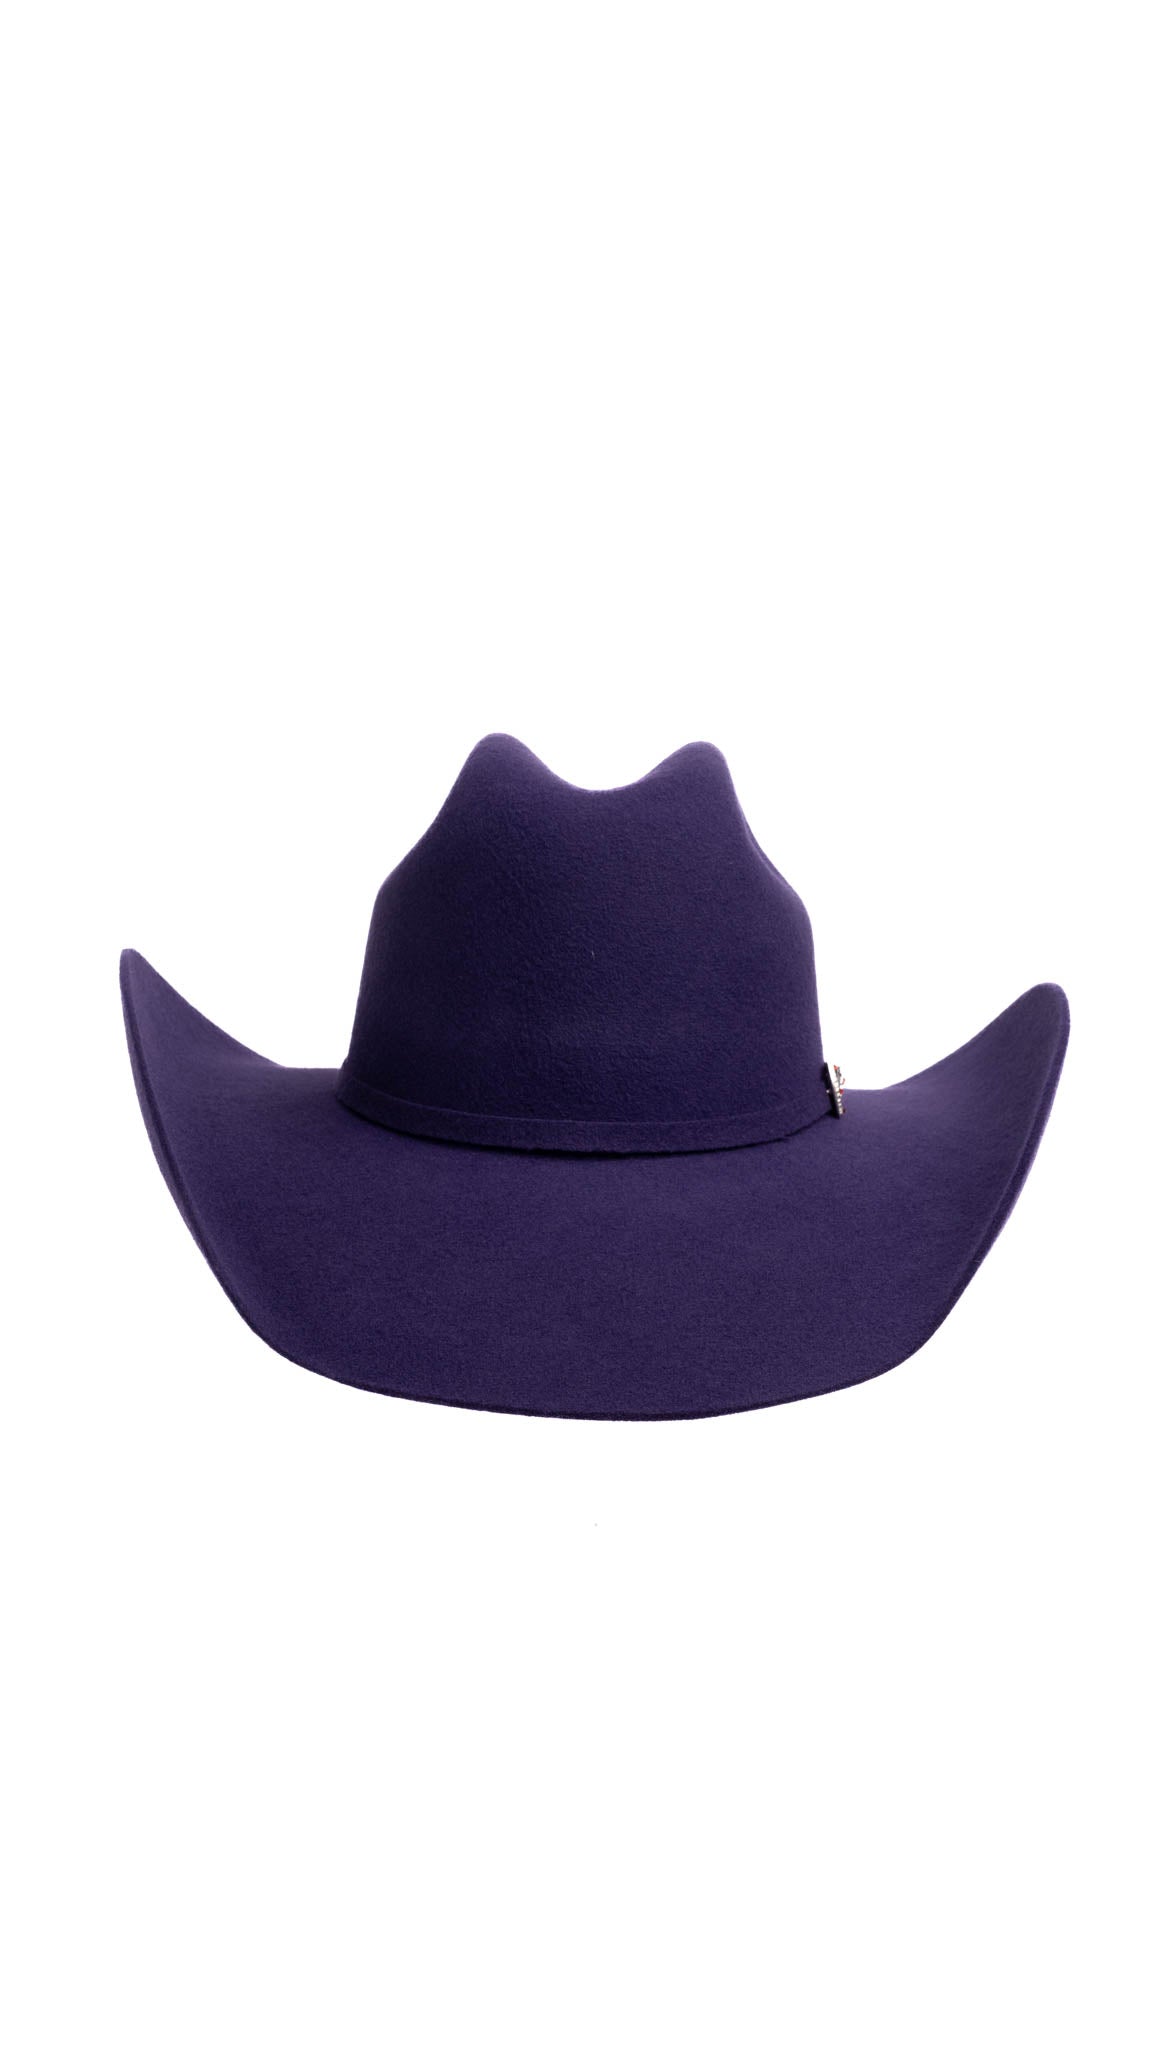 Damian Rock'em Premium Wool 6X Felt Hat